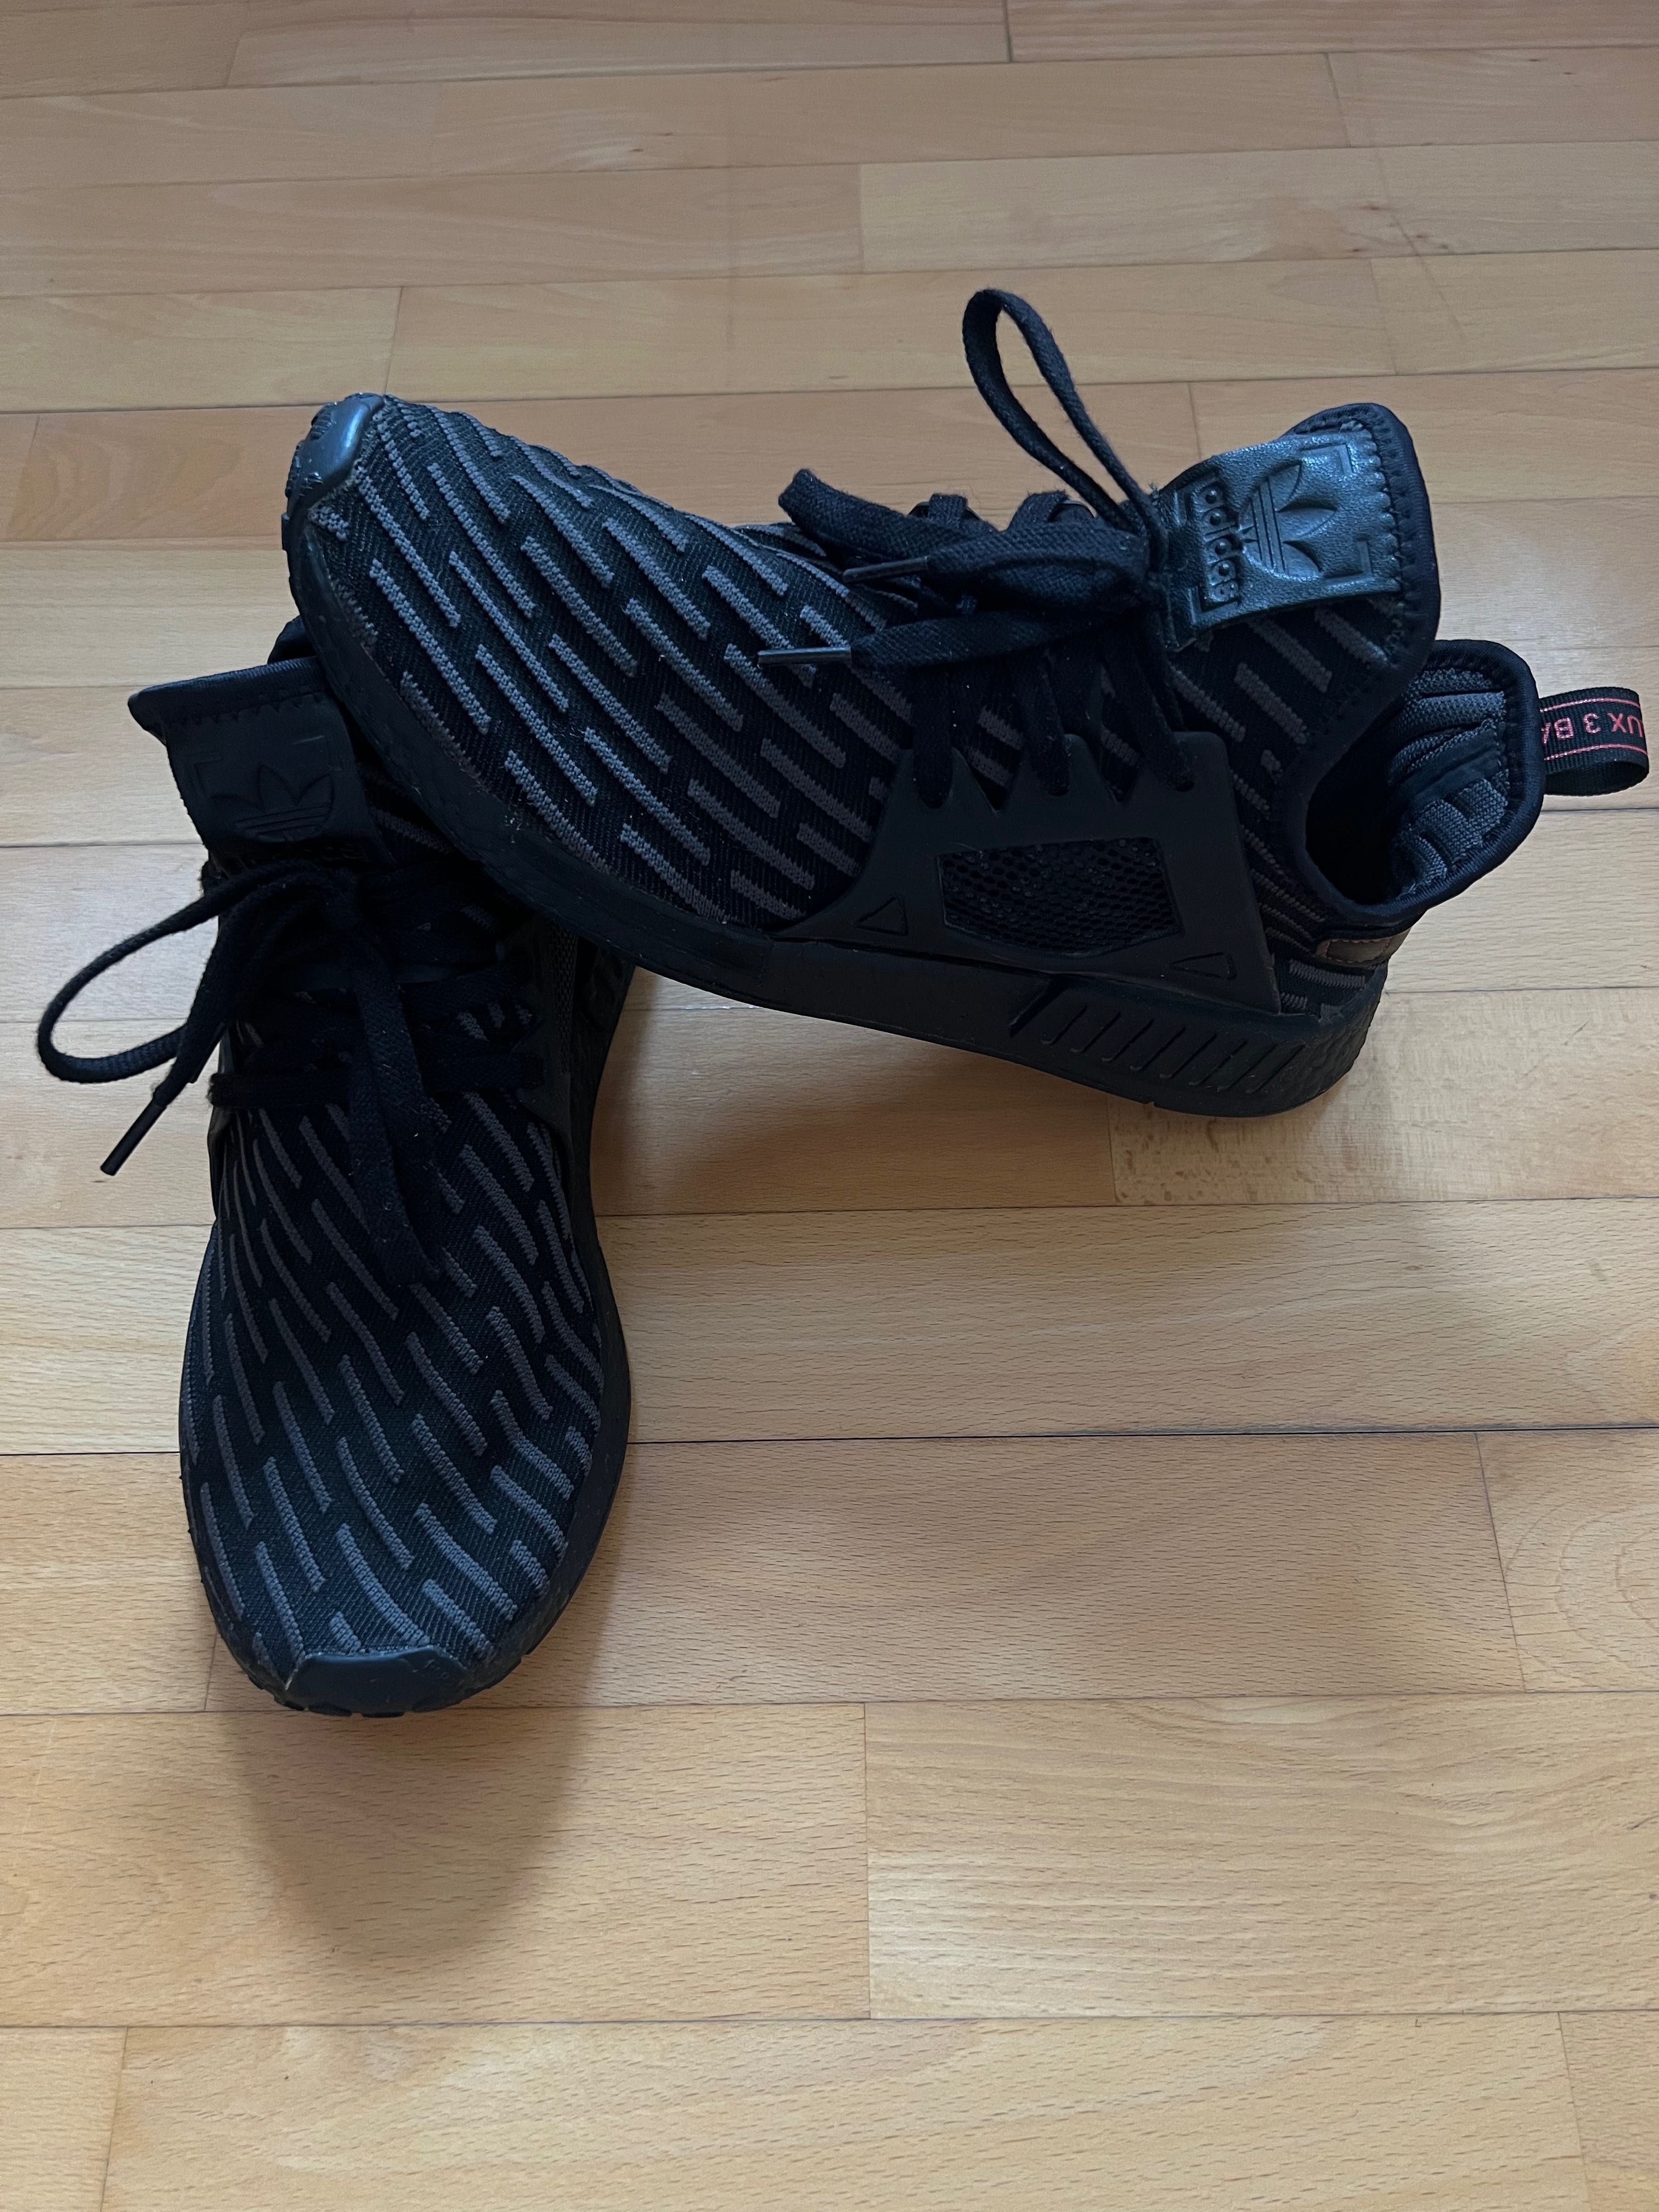 Adidas NMD XR1 Triple Black 44 2/3